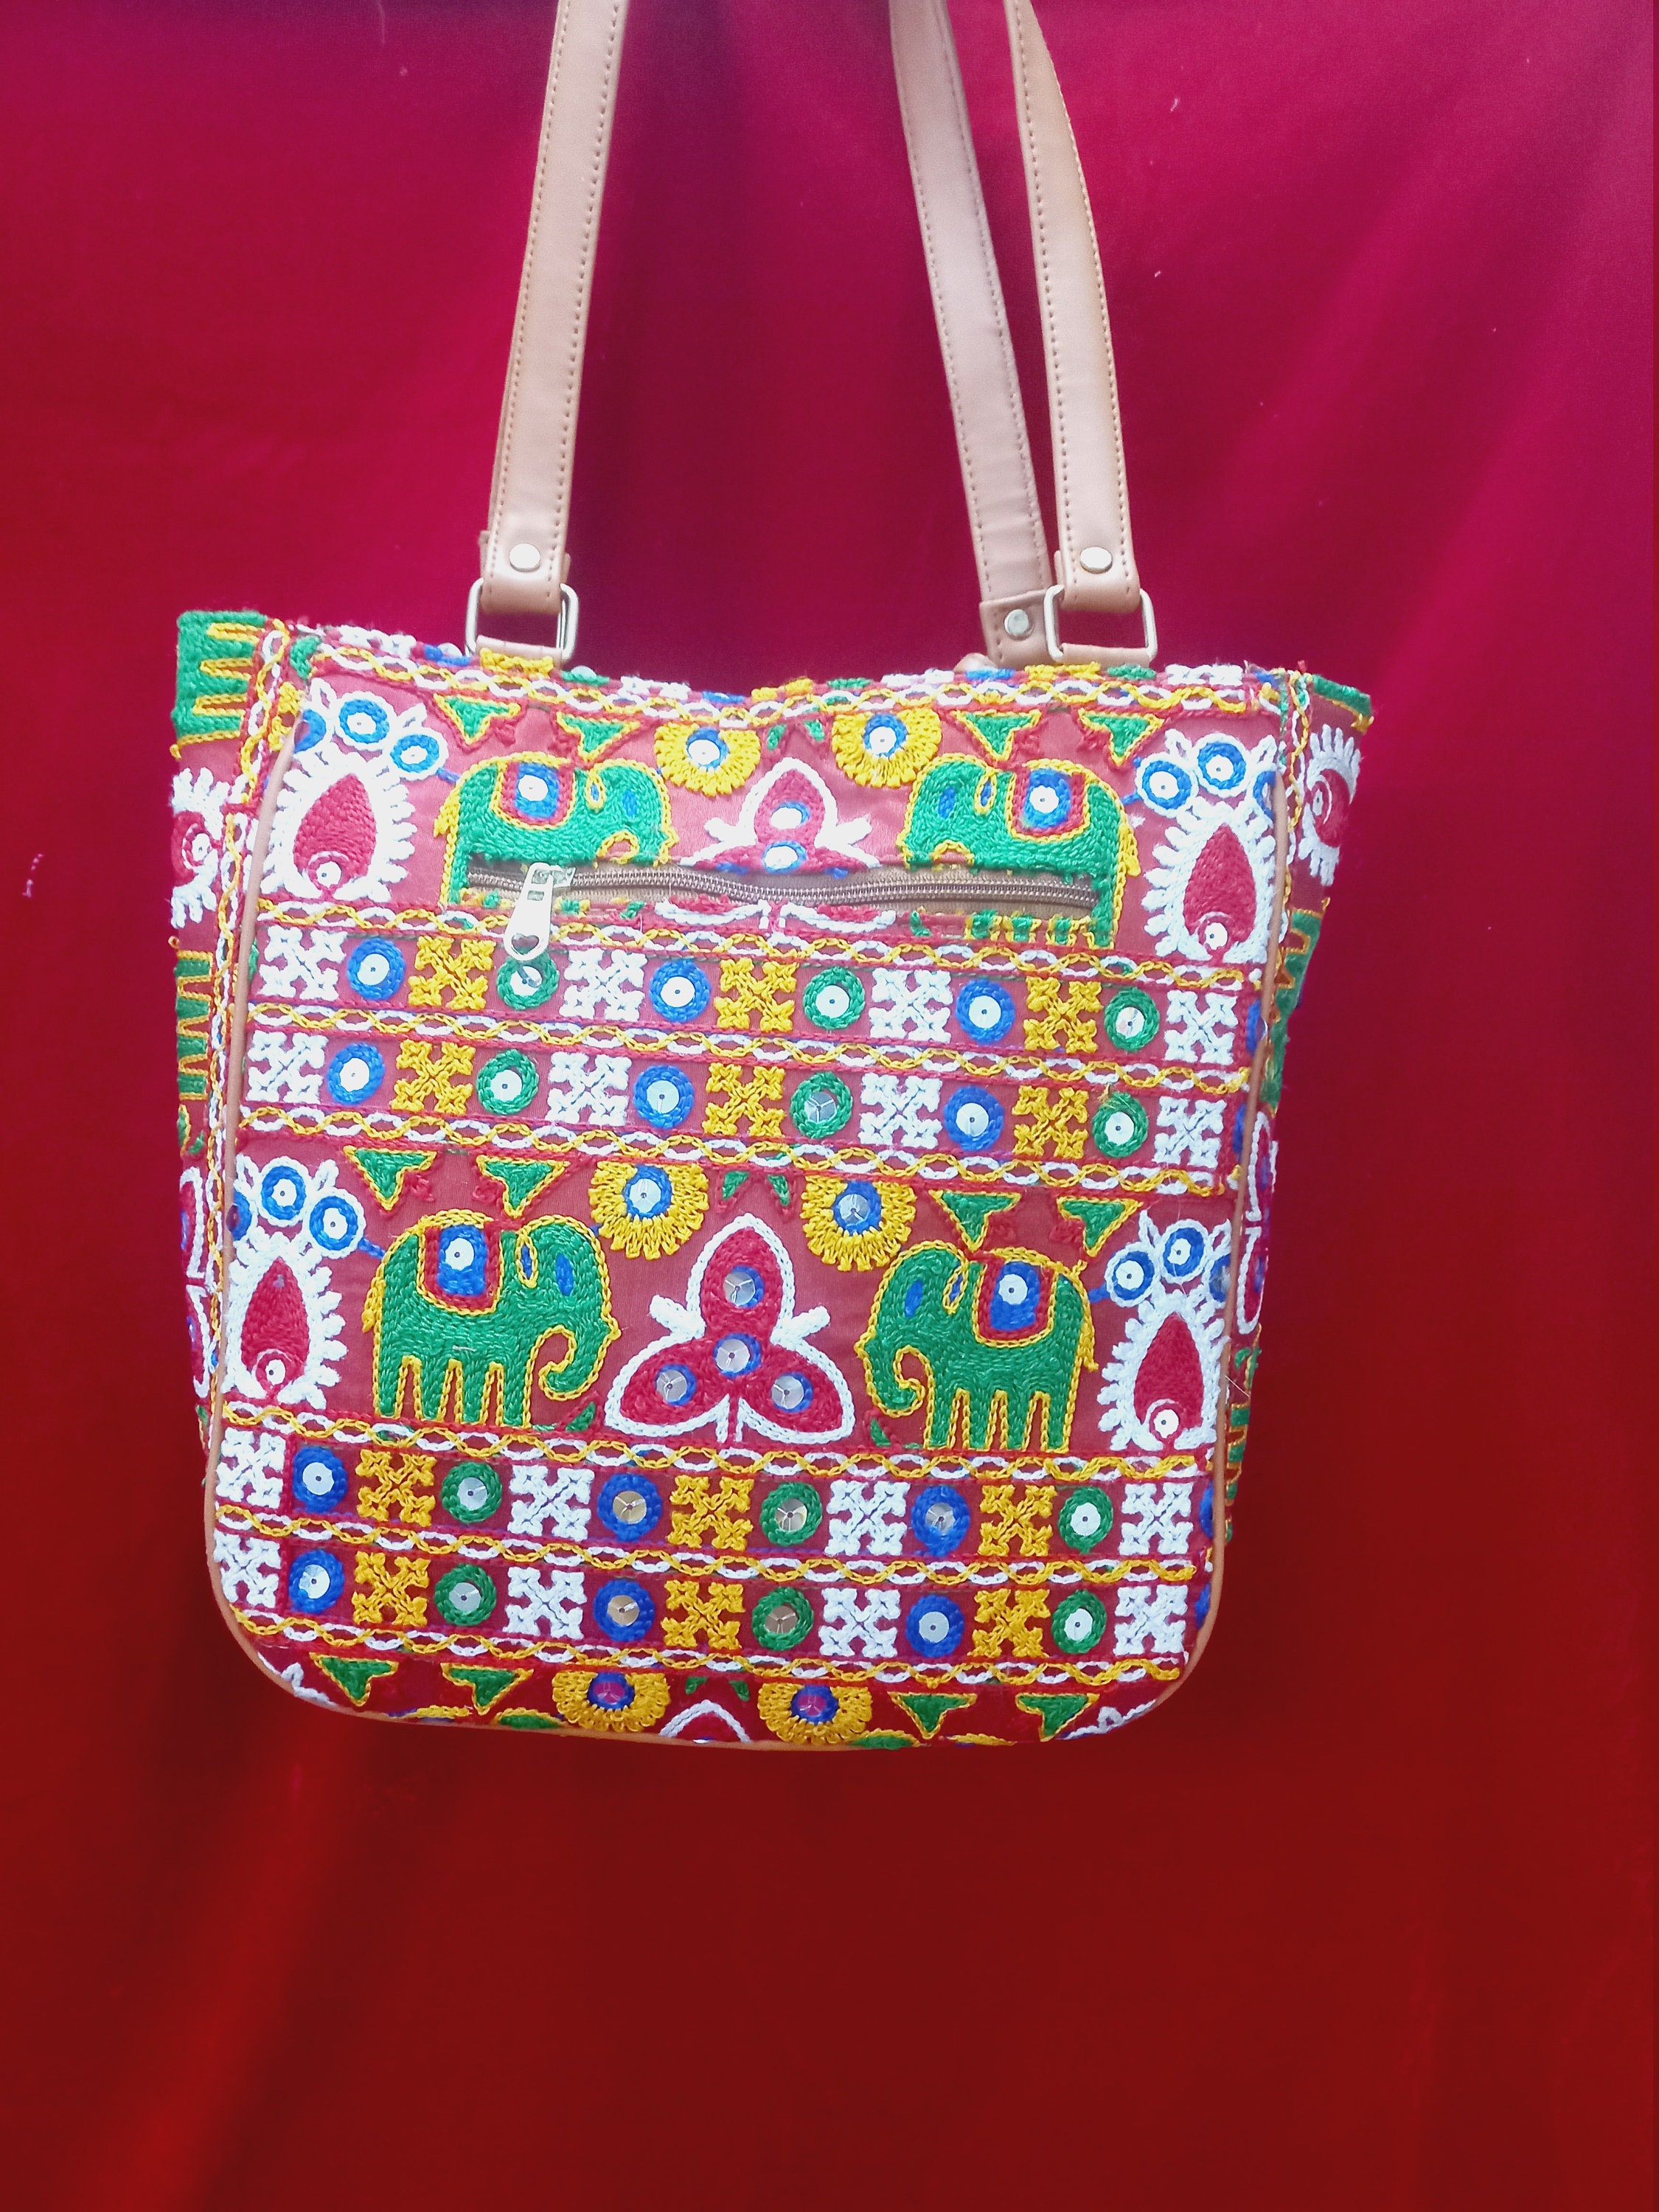 Buy Ethnic Hand Bag Online|Best Prices